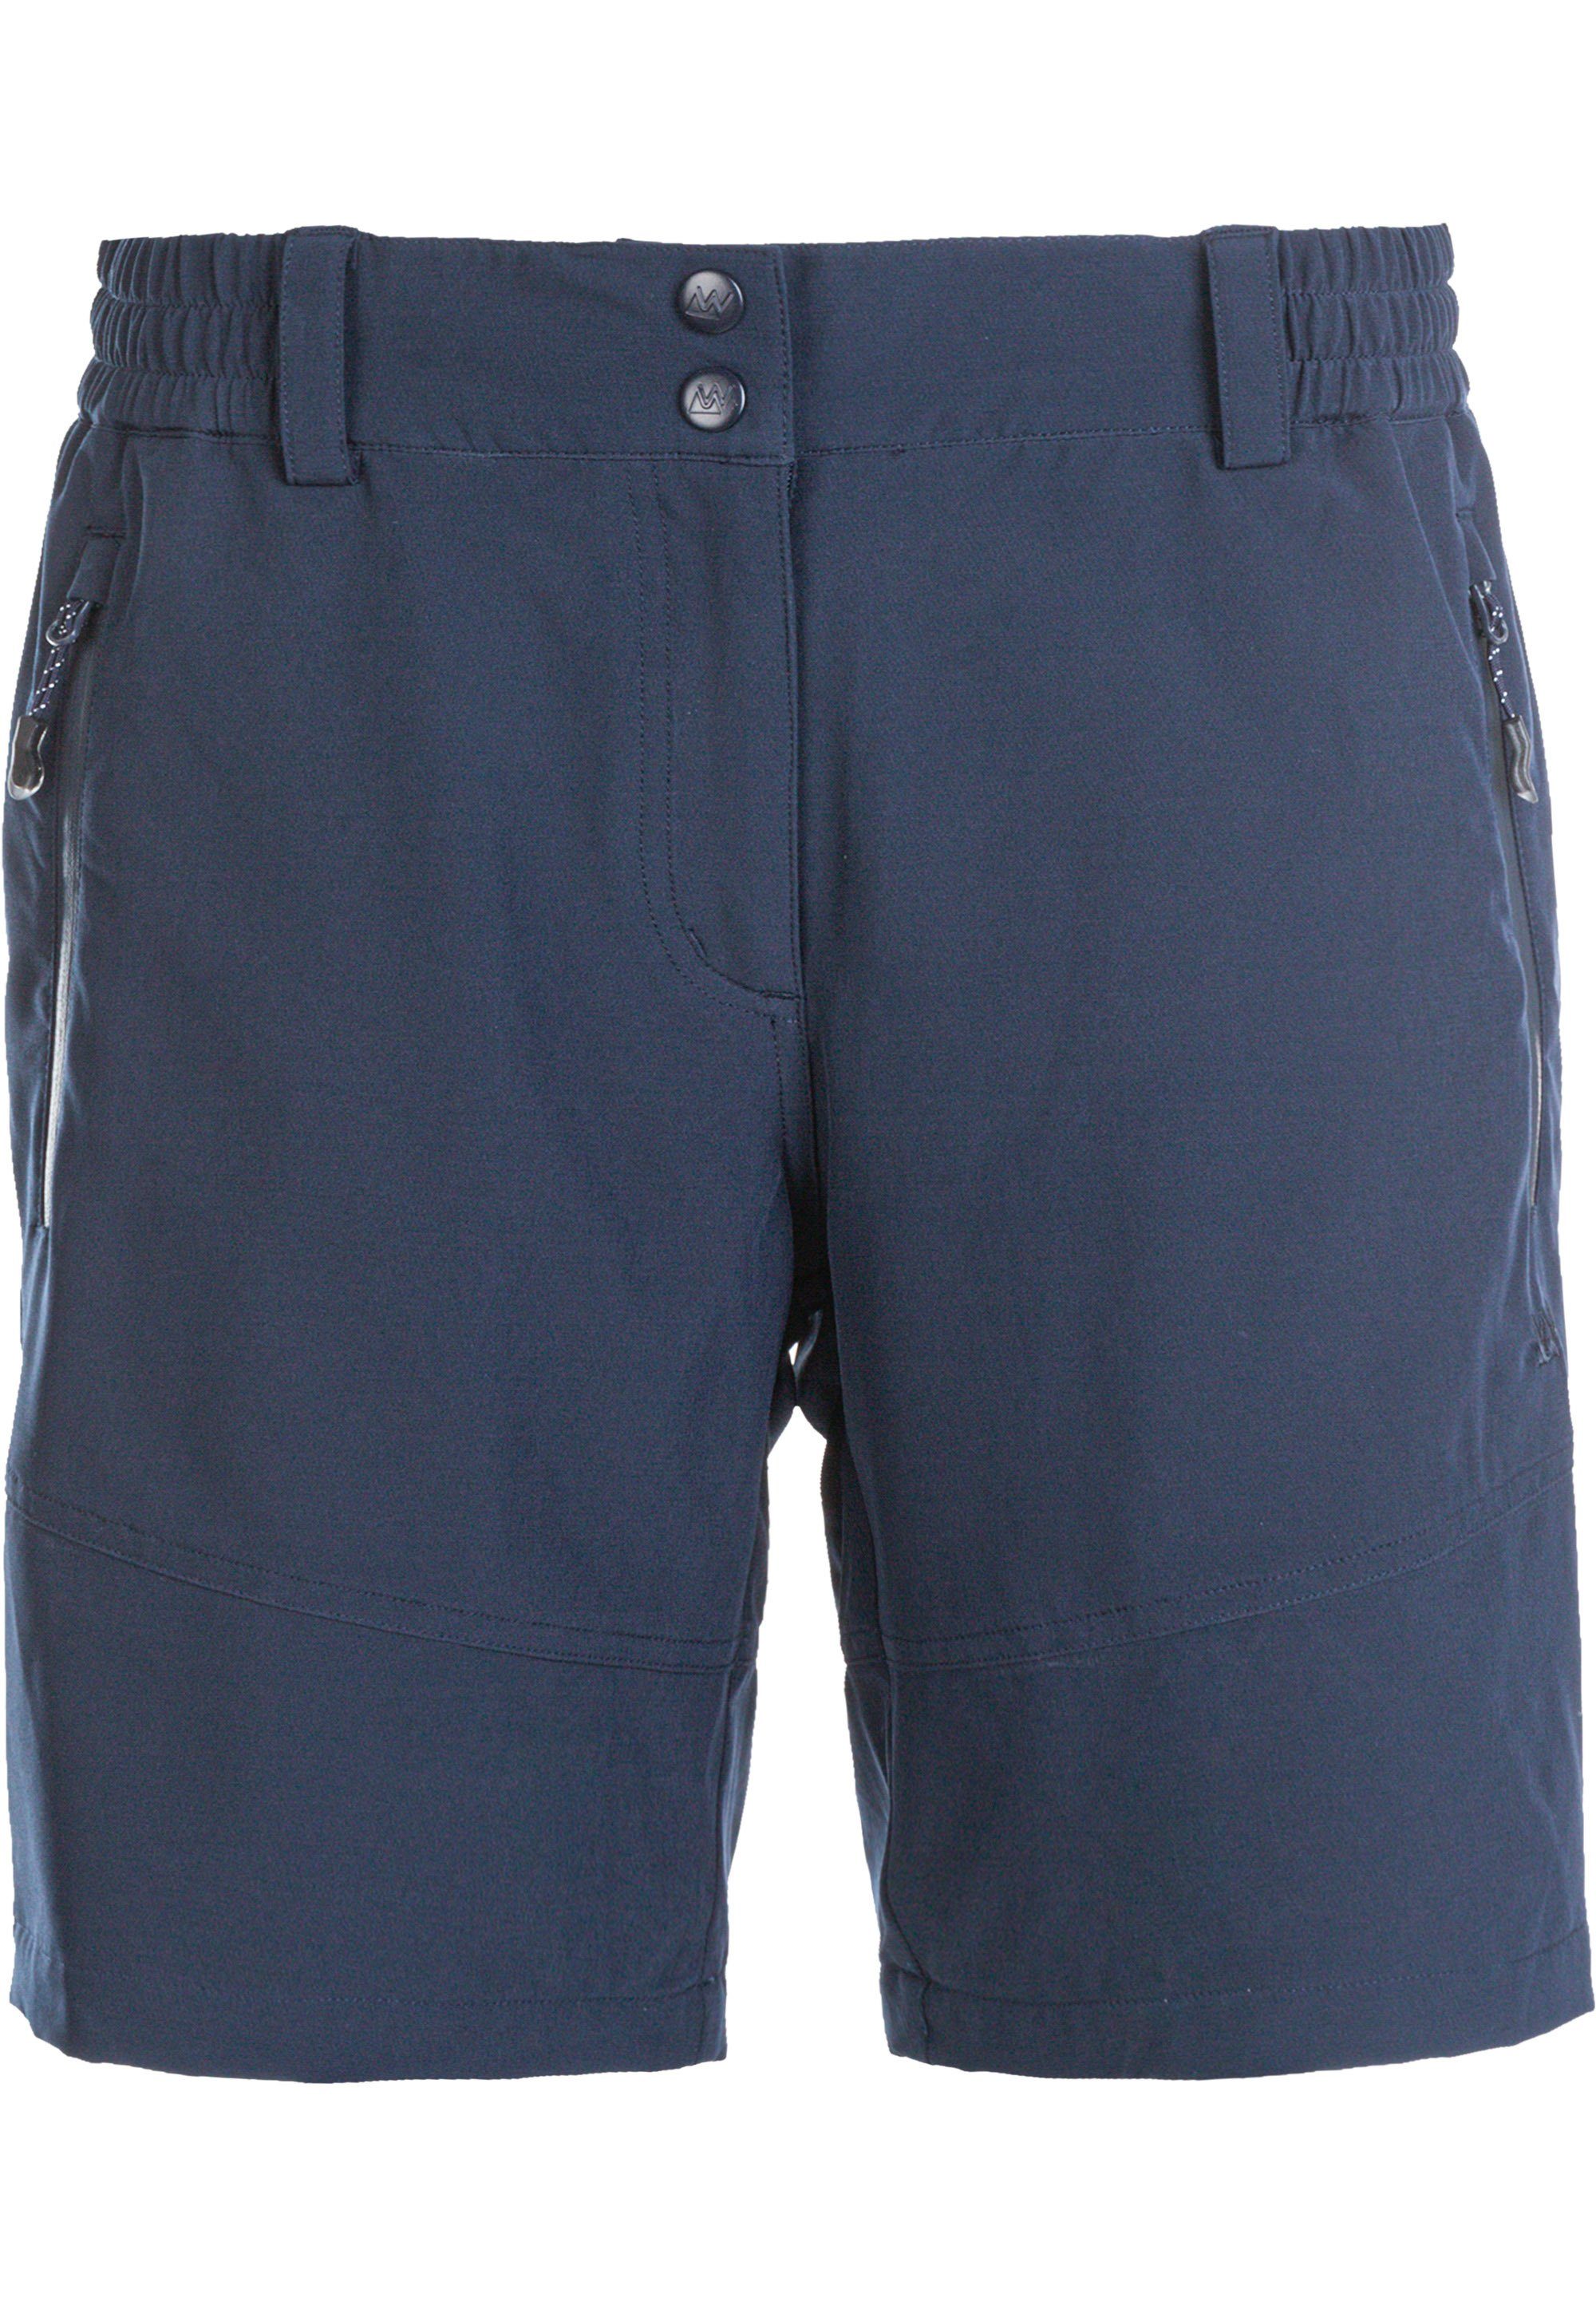 WHISTLER Shorts LALA mit extra komfortablem Funktionsstretch dunkelblau | 